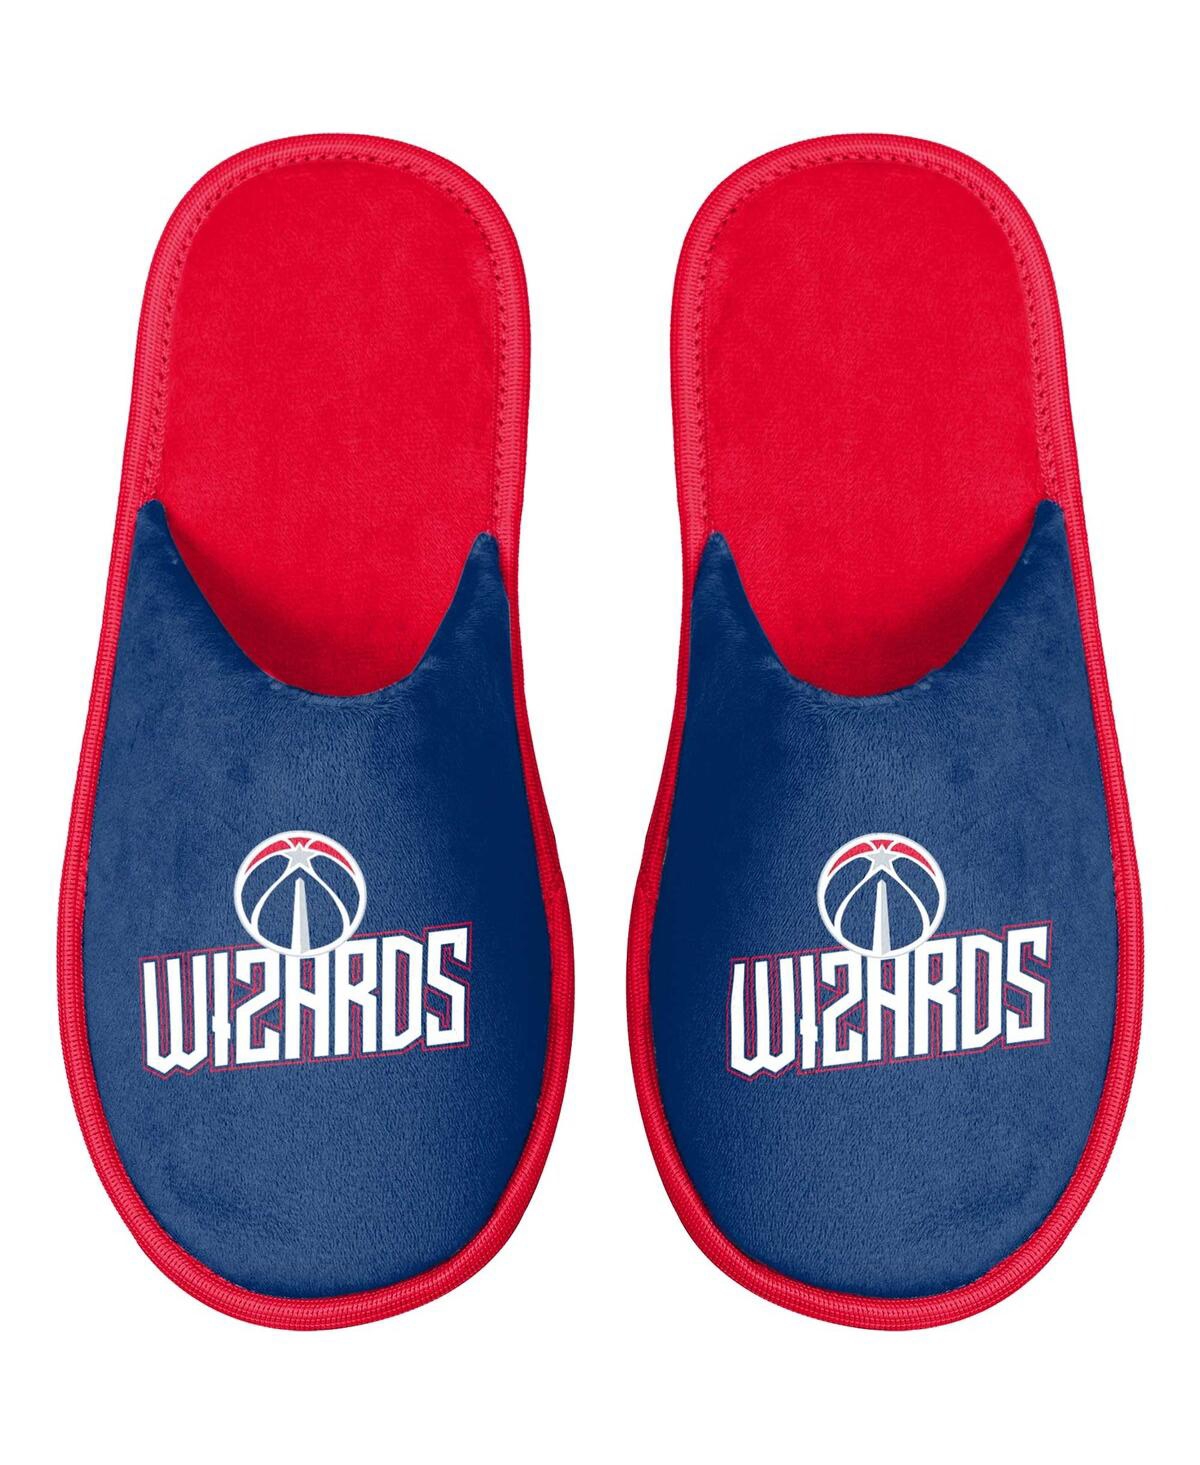 Men's Washington Wizards Scuff Slide Slippers - Navy